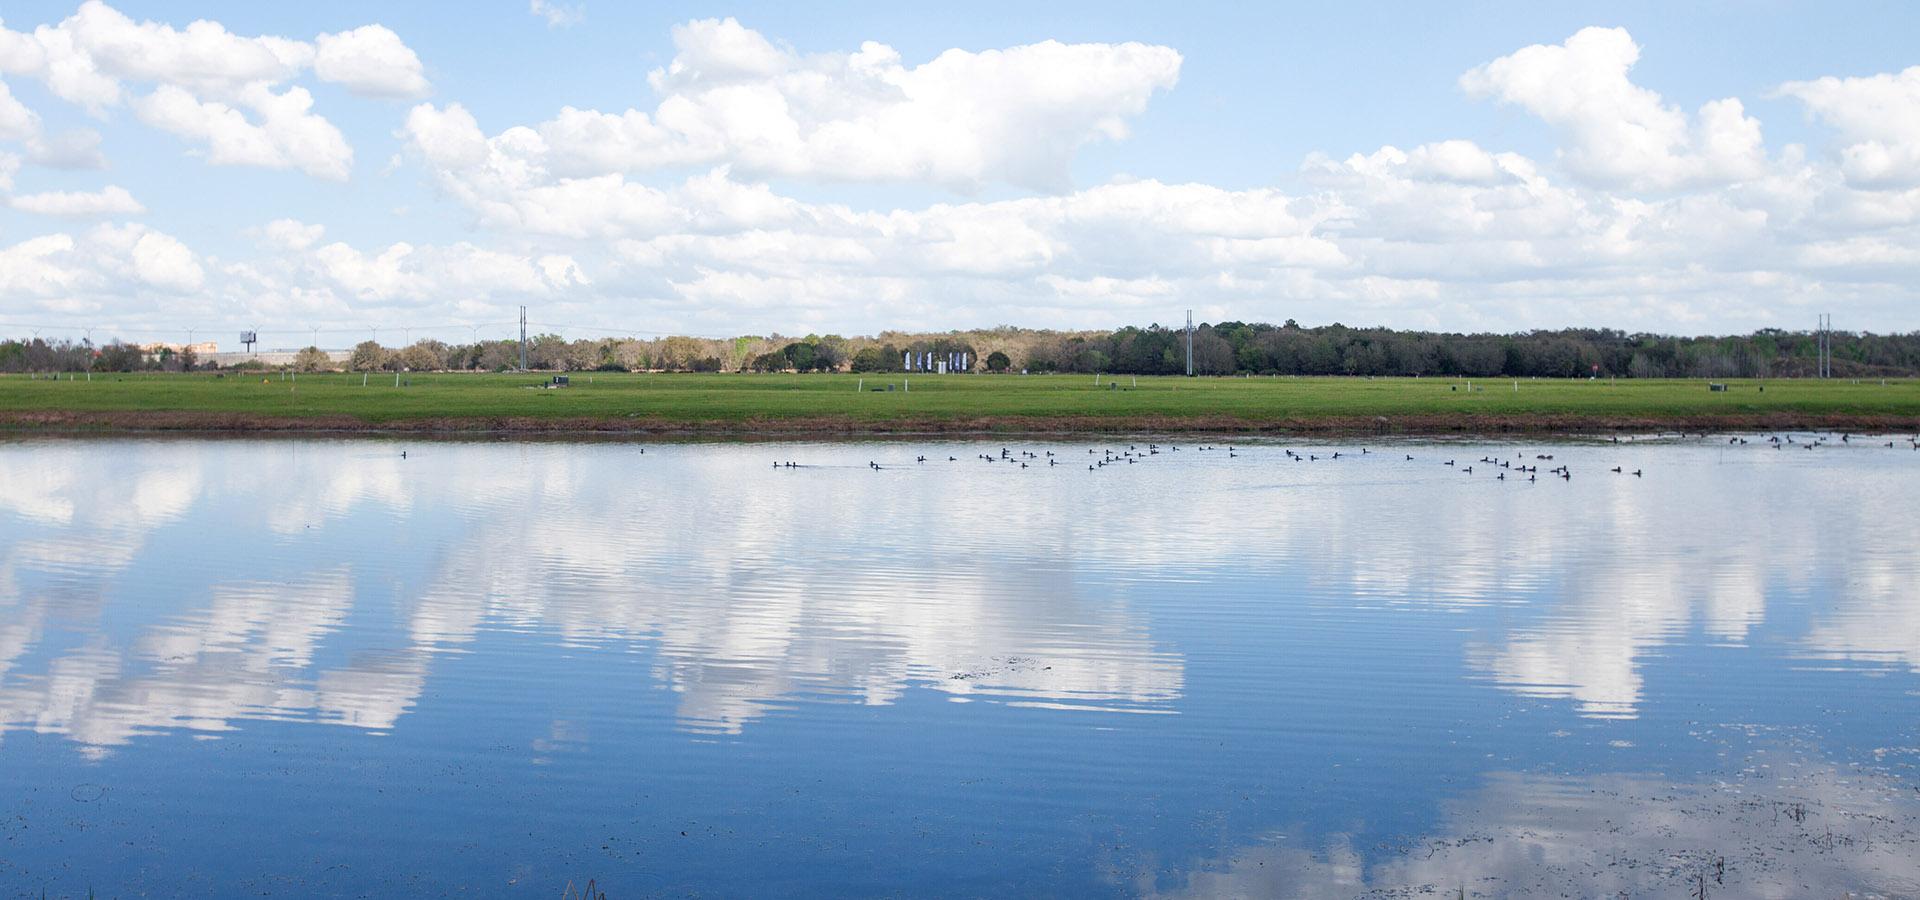 Ducks swimming in a lake at Lakeside Preserve